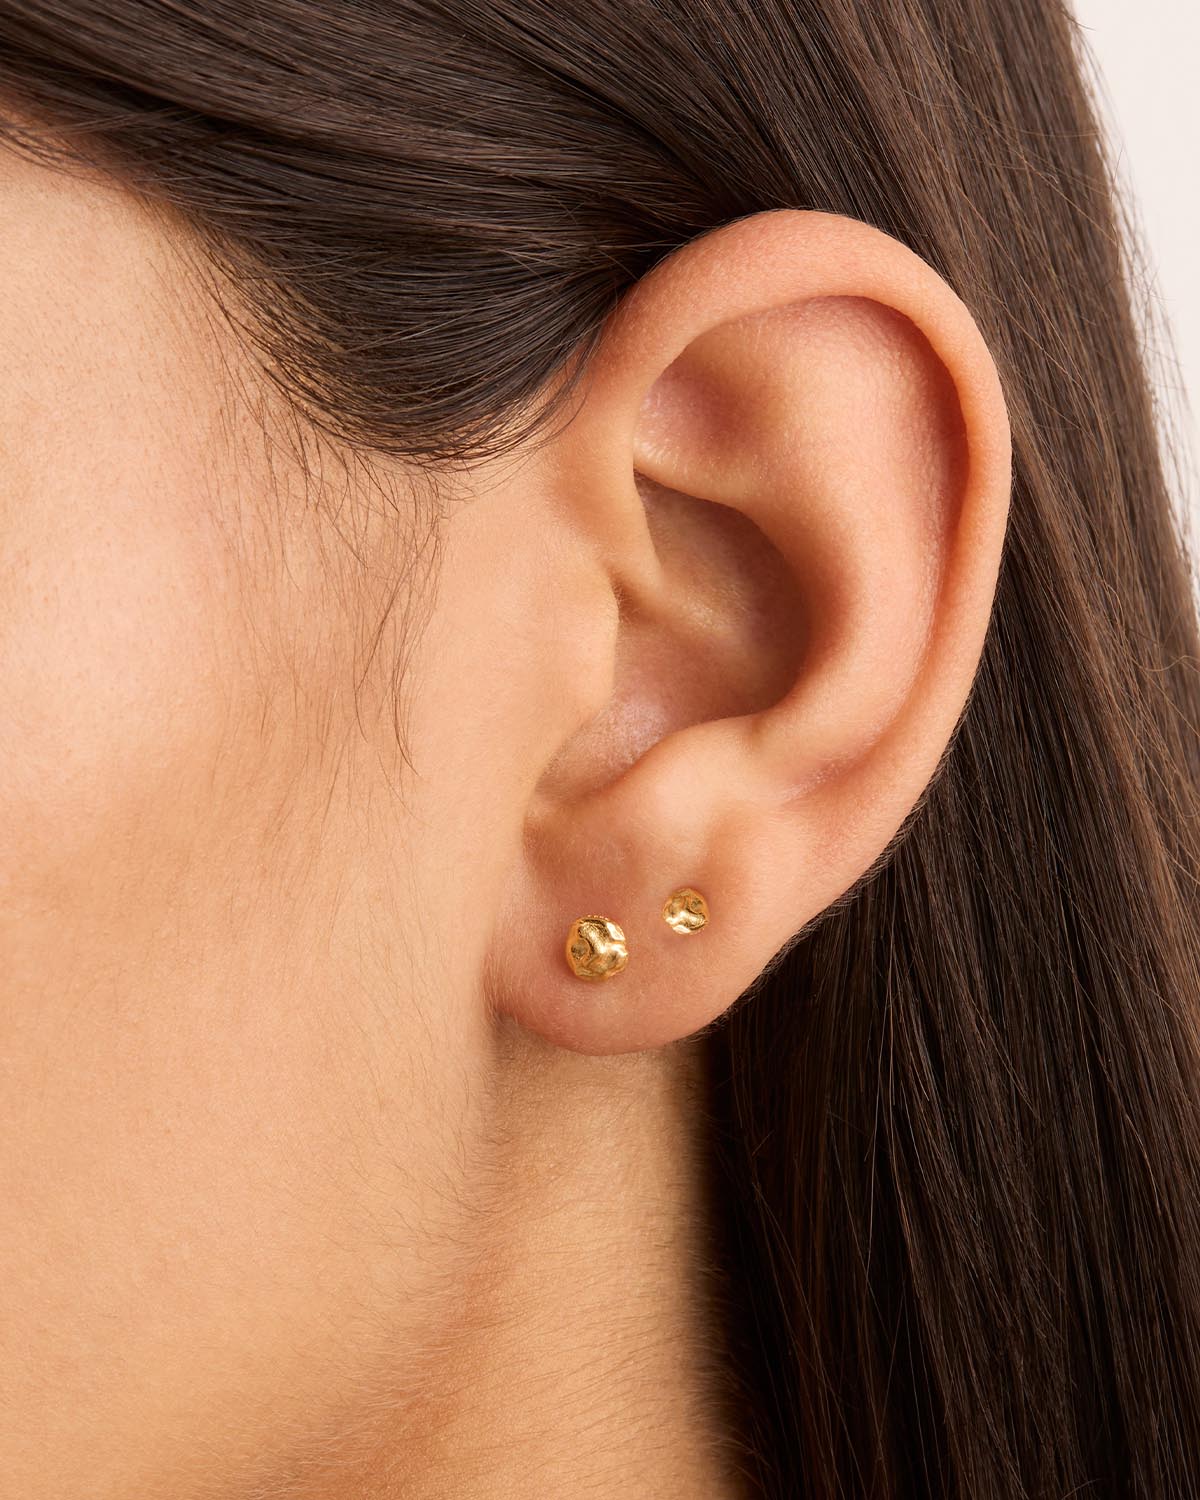 These $14 Amazon earrings look just like the $820 Bottega Veneta pair  celebrities love